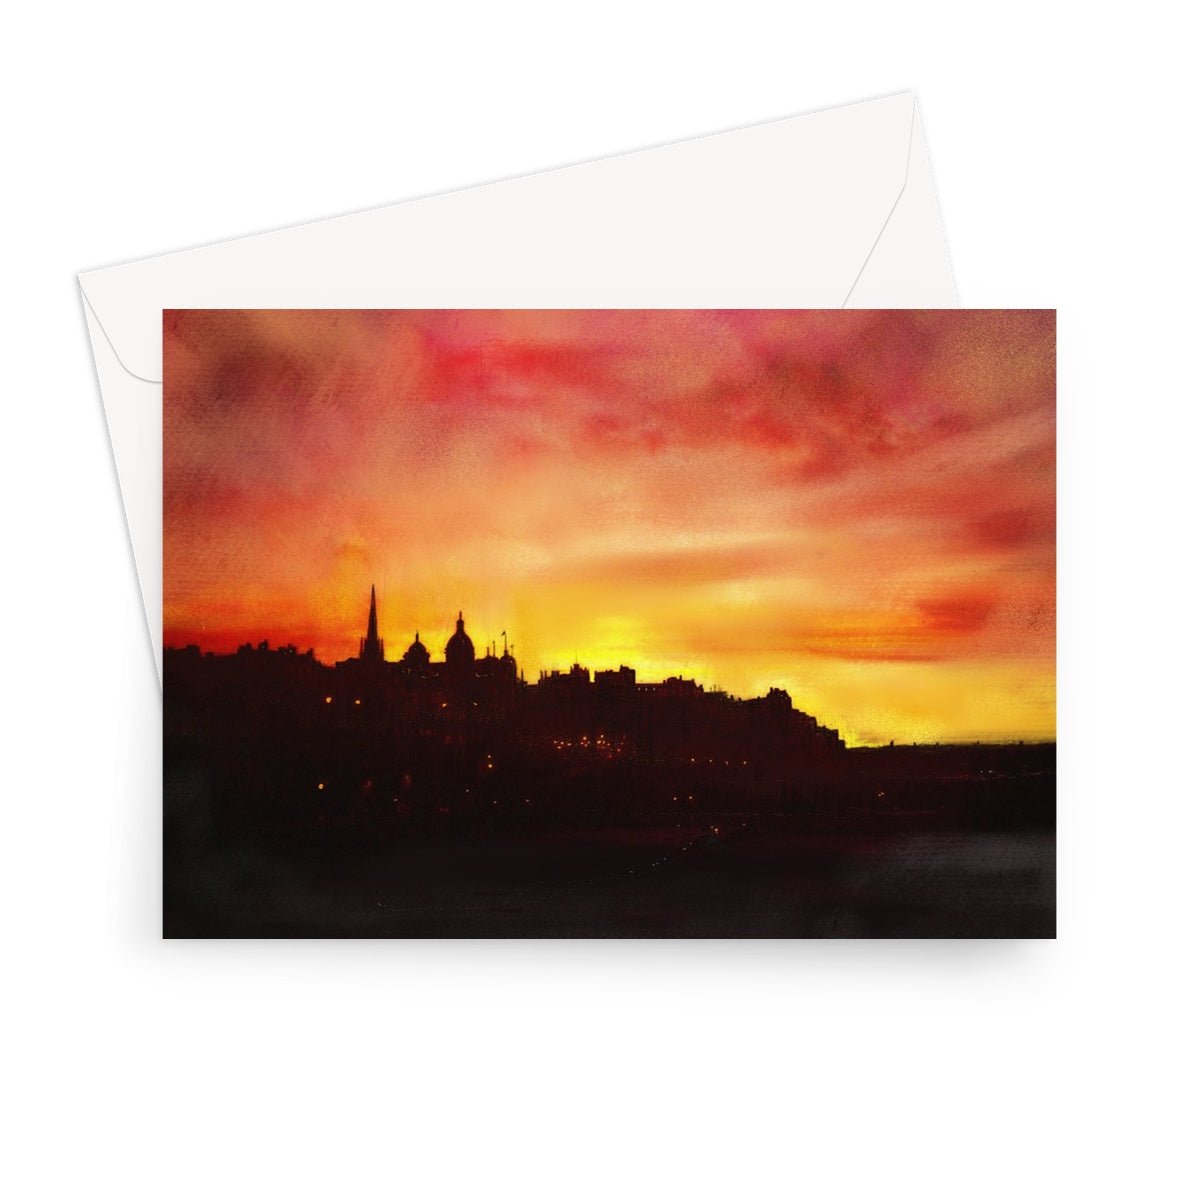 Edinburgh Sunset Art Gifts Greeting Card-Greetings Cards-Edinburgh & Glasgow Art Gallery-7"x5"-1 Card-Paintings, Prints, Homeware, Art Gifts From Scotland By Scottish Artist Kevin Hunter